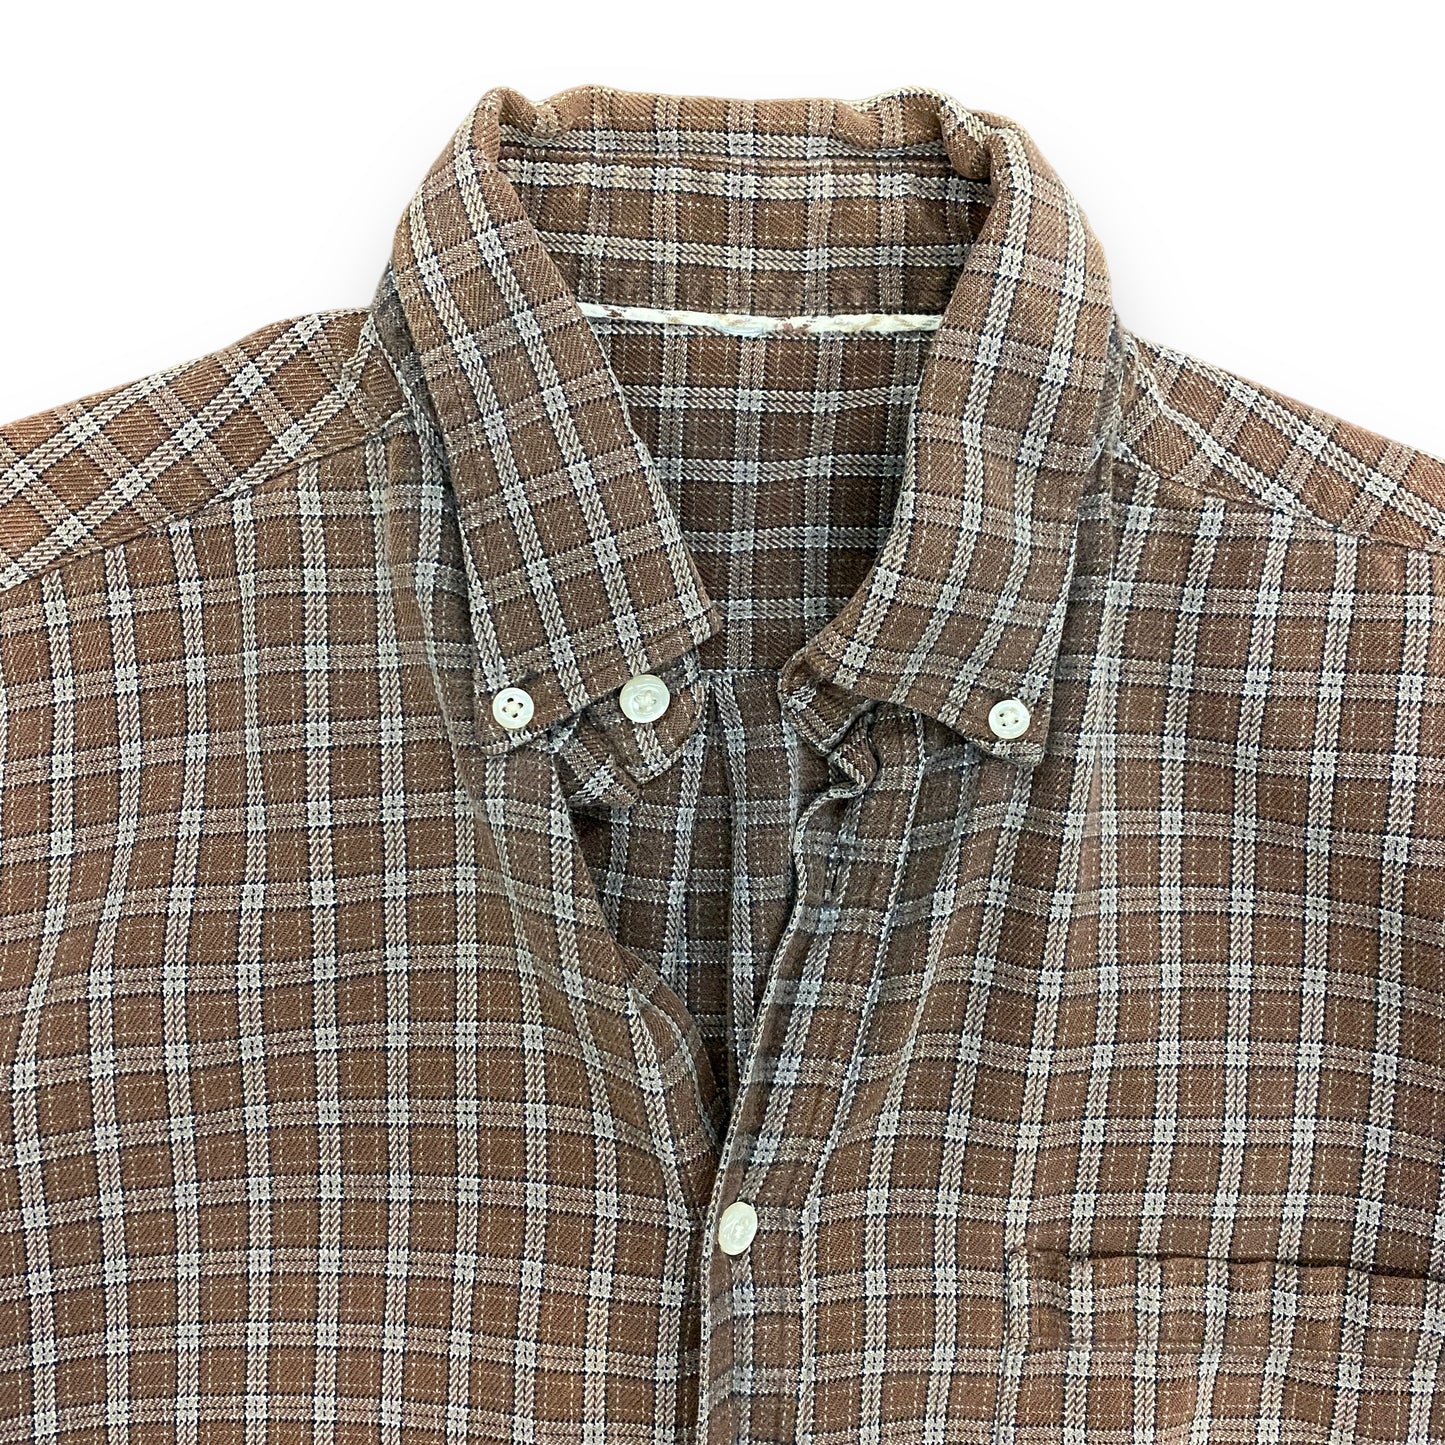 1990s Brown Cotton Flannel Button Up - Size Medium